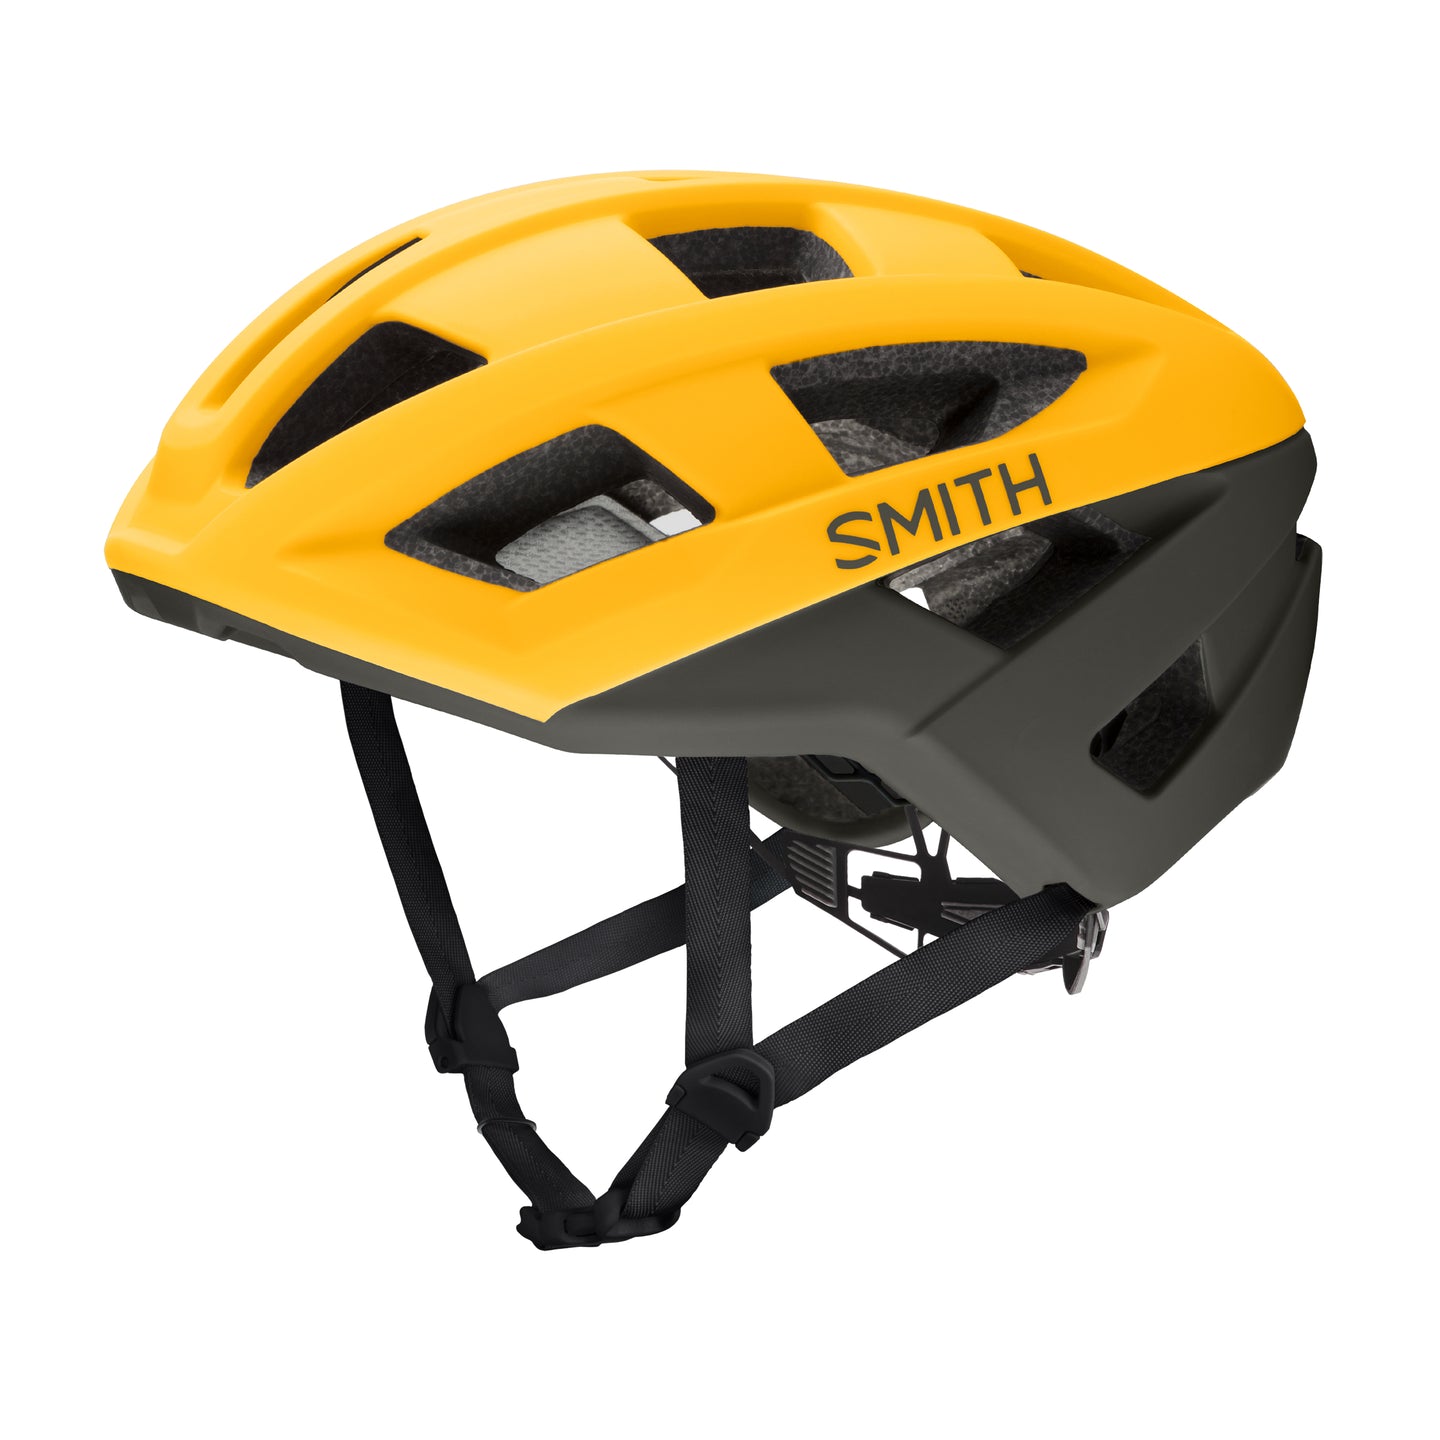 The Smith Portal Road Bike Helmet